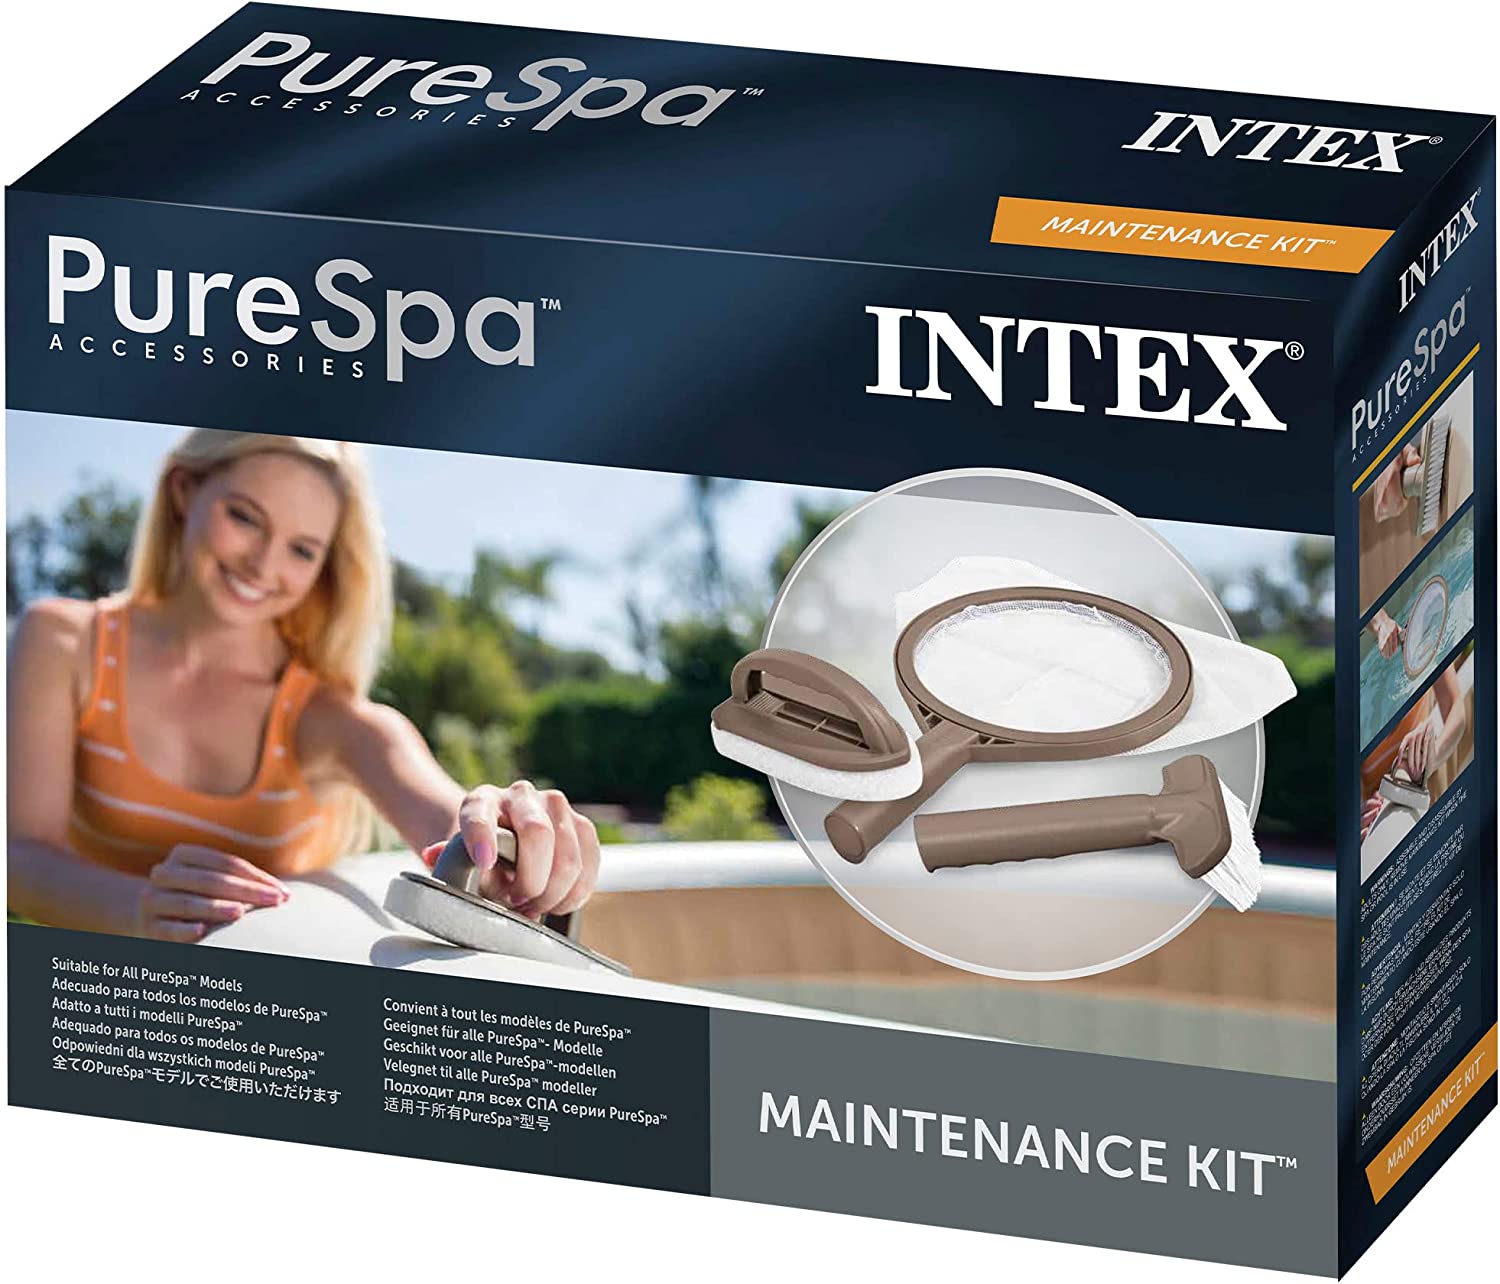 Intex "PureSpa" Maintenance Kit for Hot Tubs